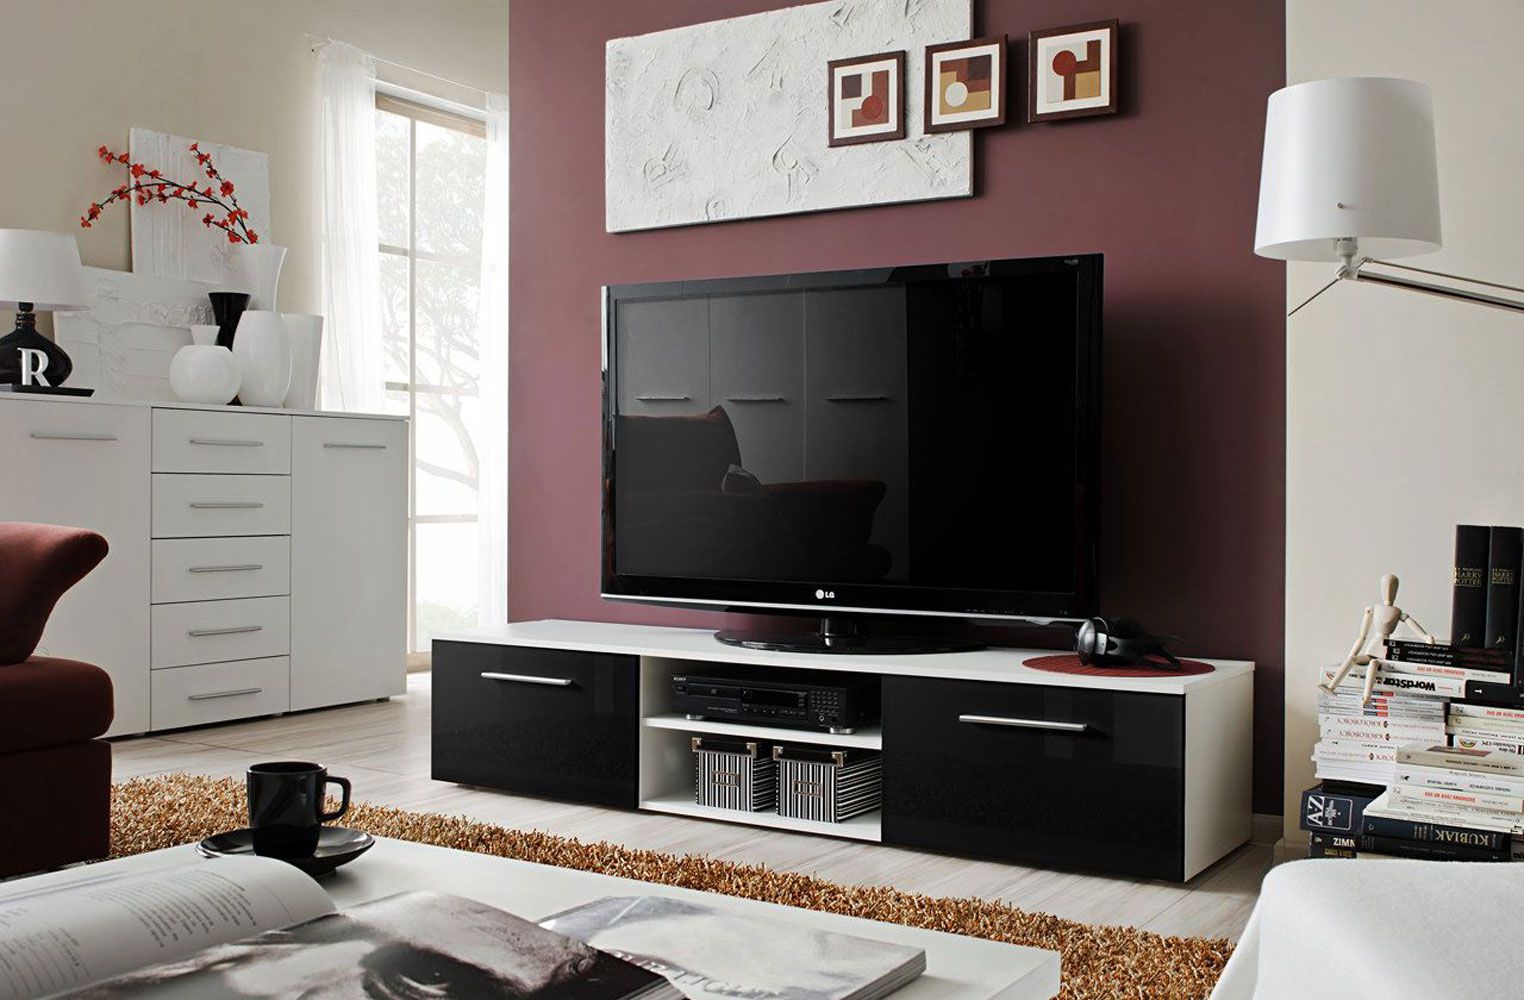 Salmeli 23 TV cabinet, color: white / black - Dimensions: 35 x 180 x 45 cm (H x W x D), with four compartments